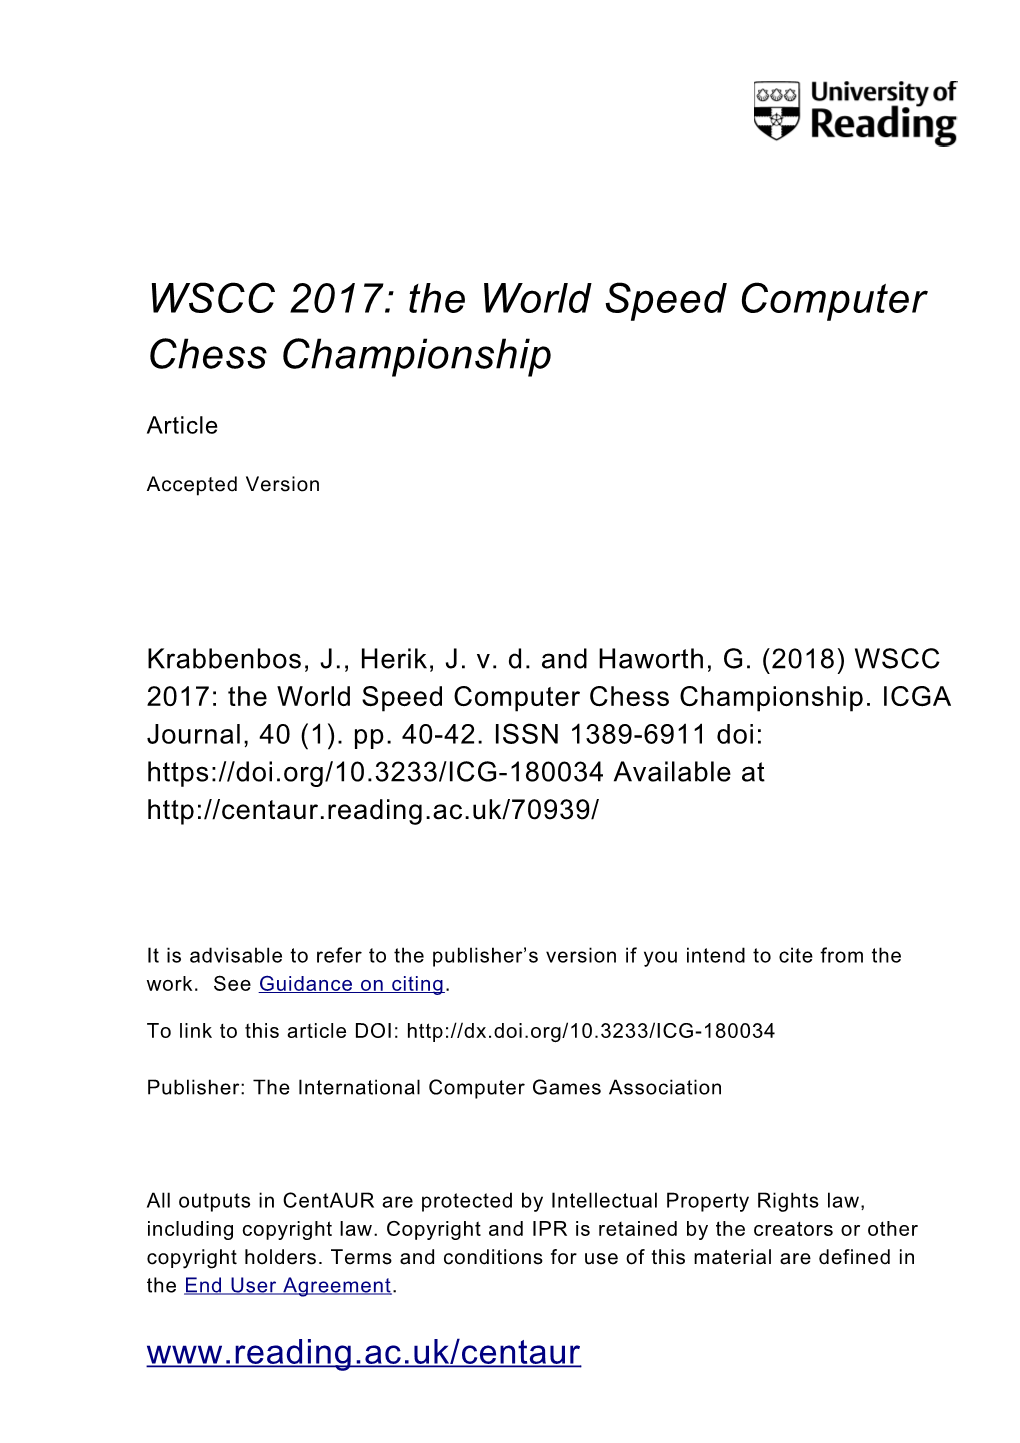 WSCC 2017: the World Speed Computer Chess Championship